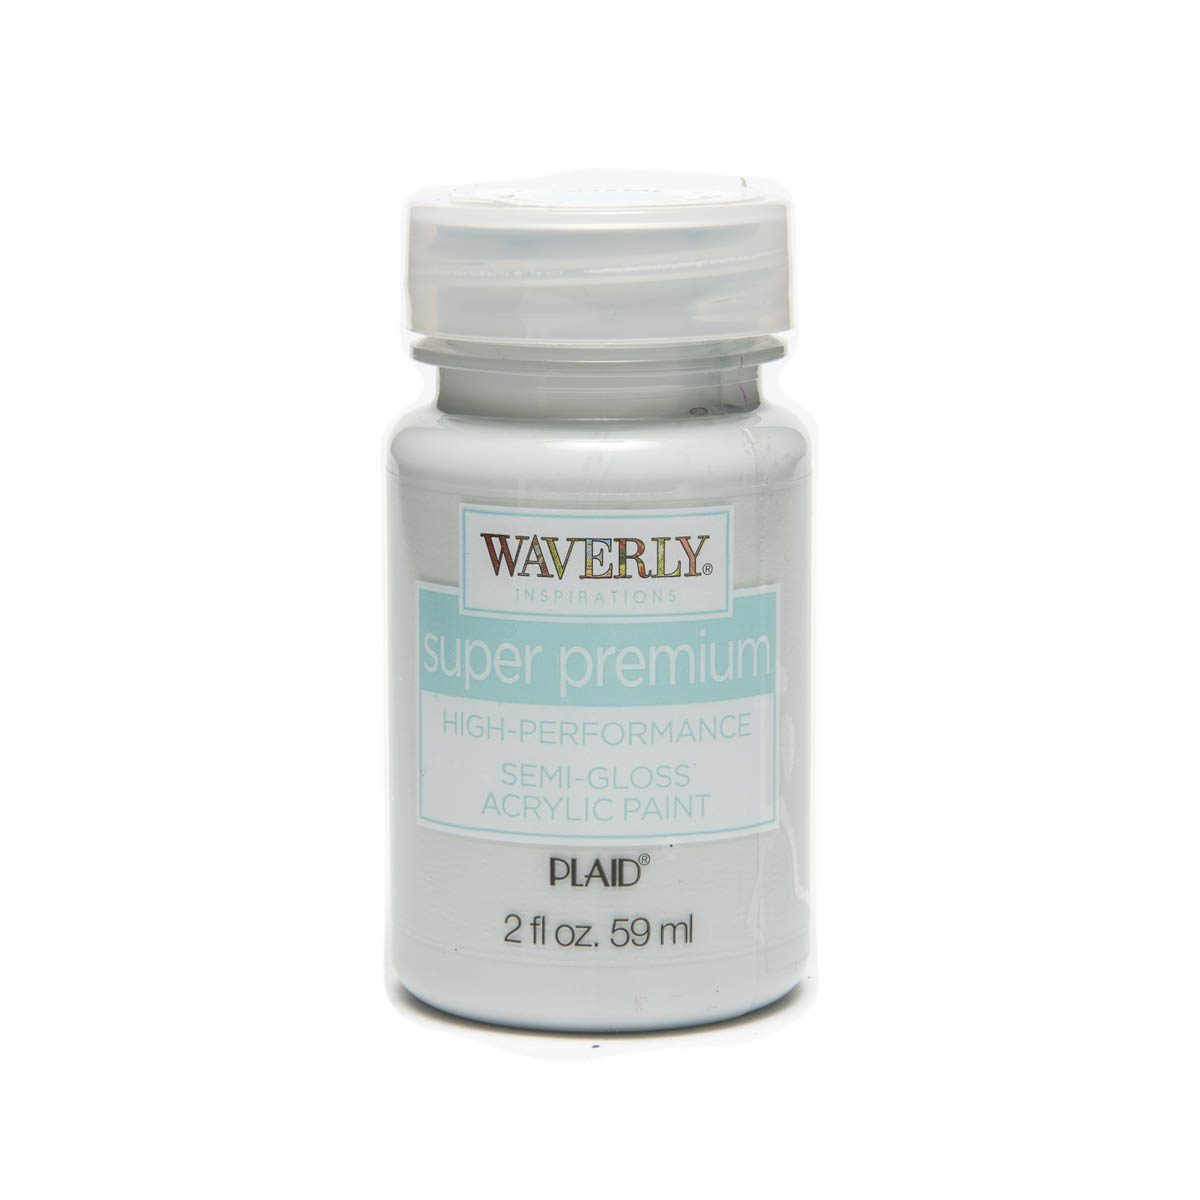 Waverly ® Inspirations Super Premium Semi-Gloss Acrylic Paint - Crystal, 2 oz. - 60636E